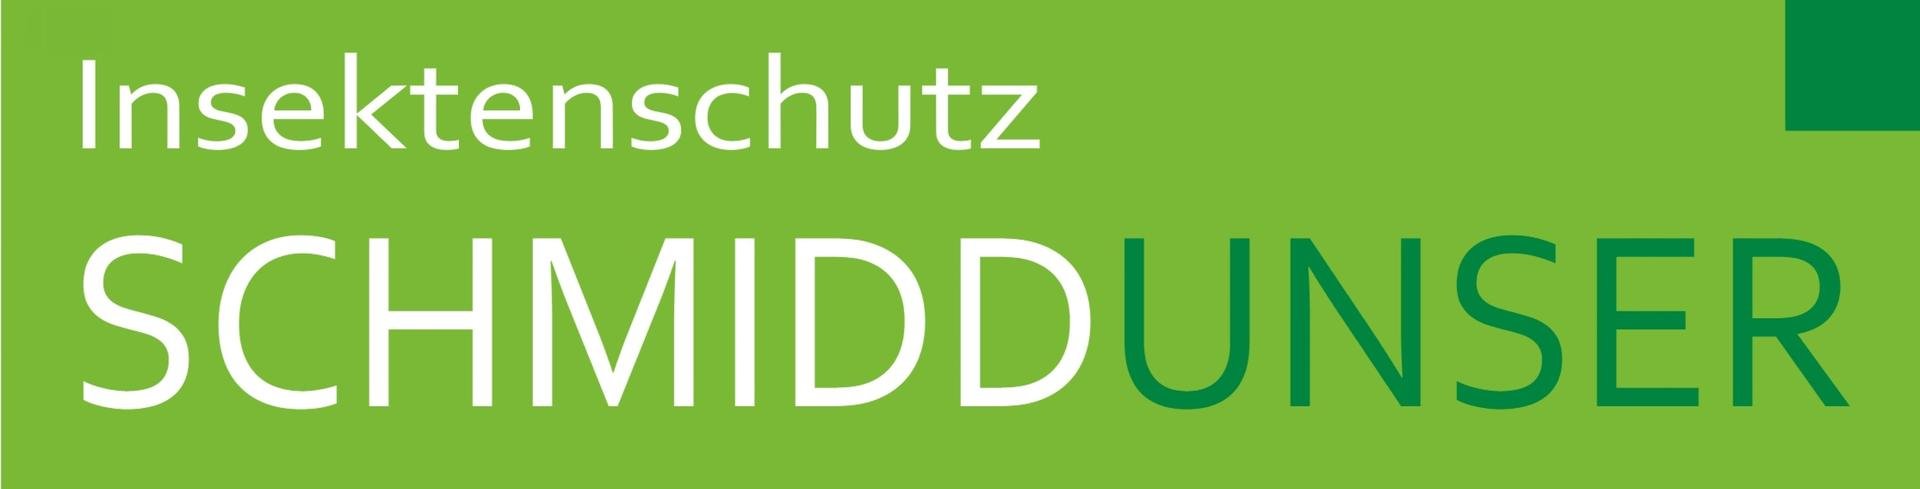 Schmiddunser Insektenschutz & Sonnenschutz in Weißenhorn